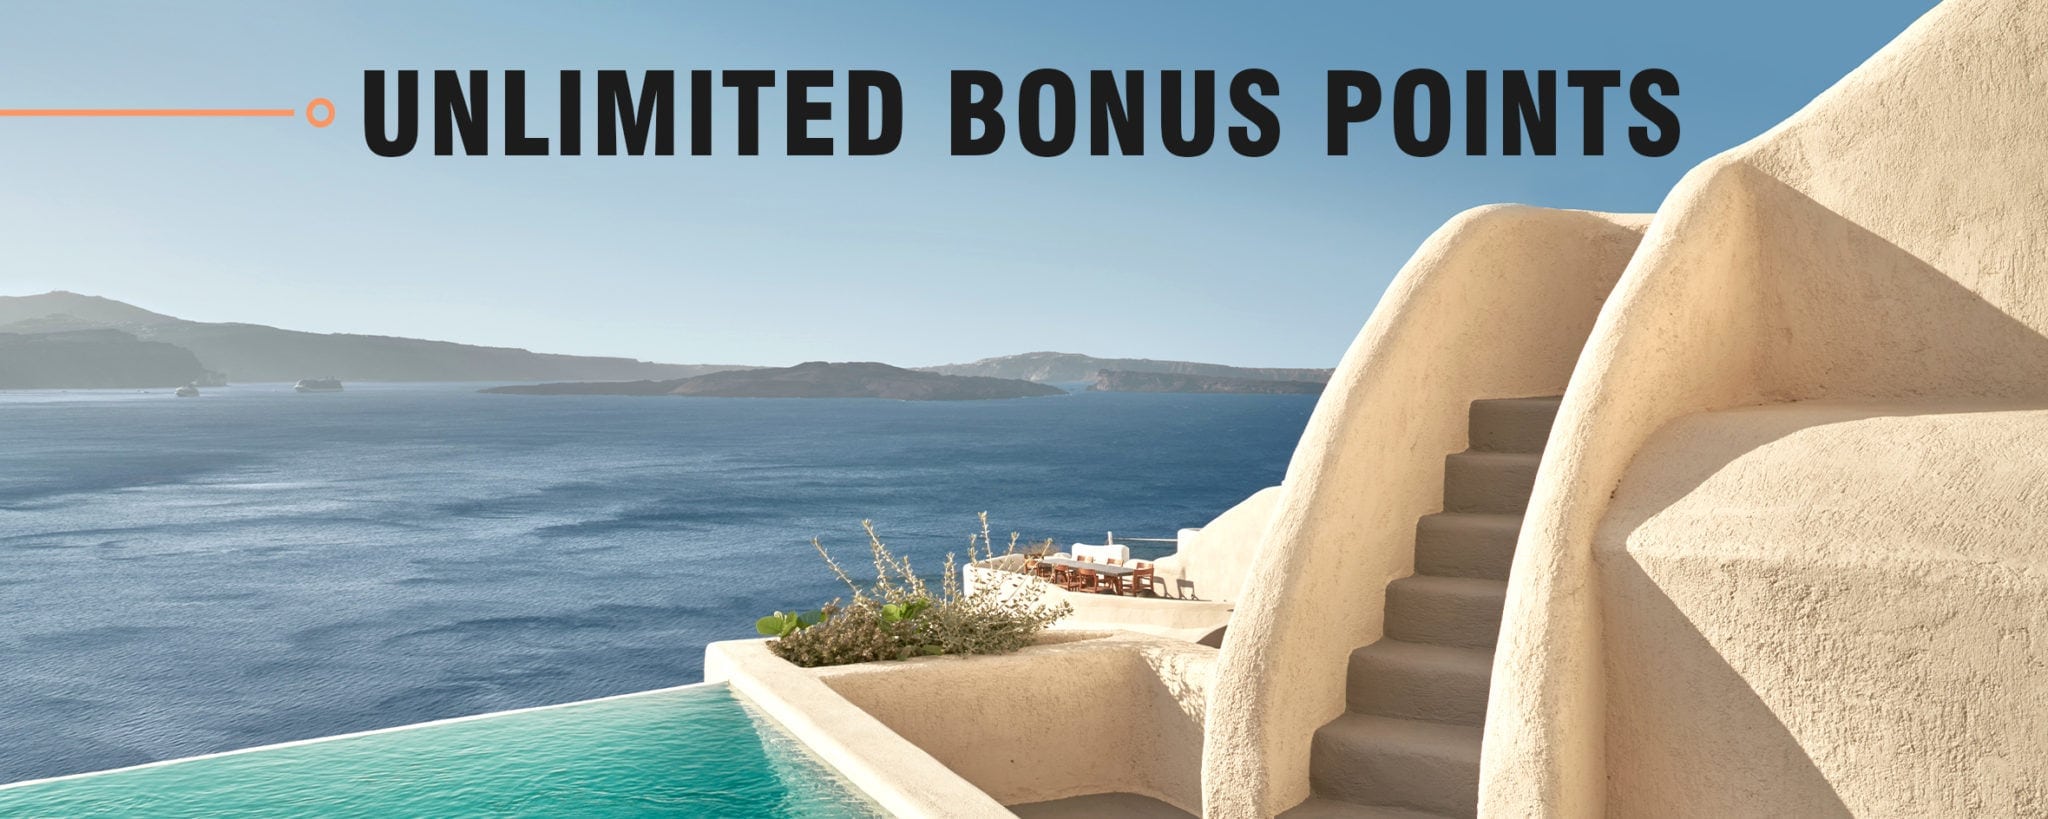 Marriott Bonvoy unlimited bonus points